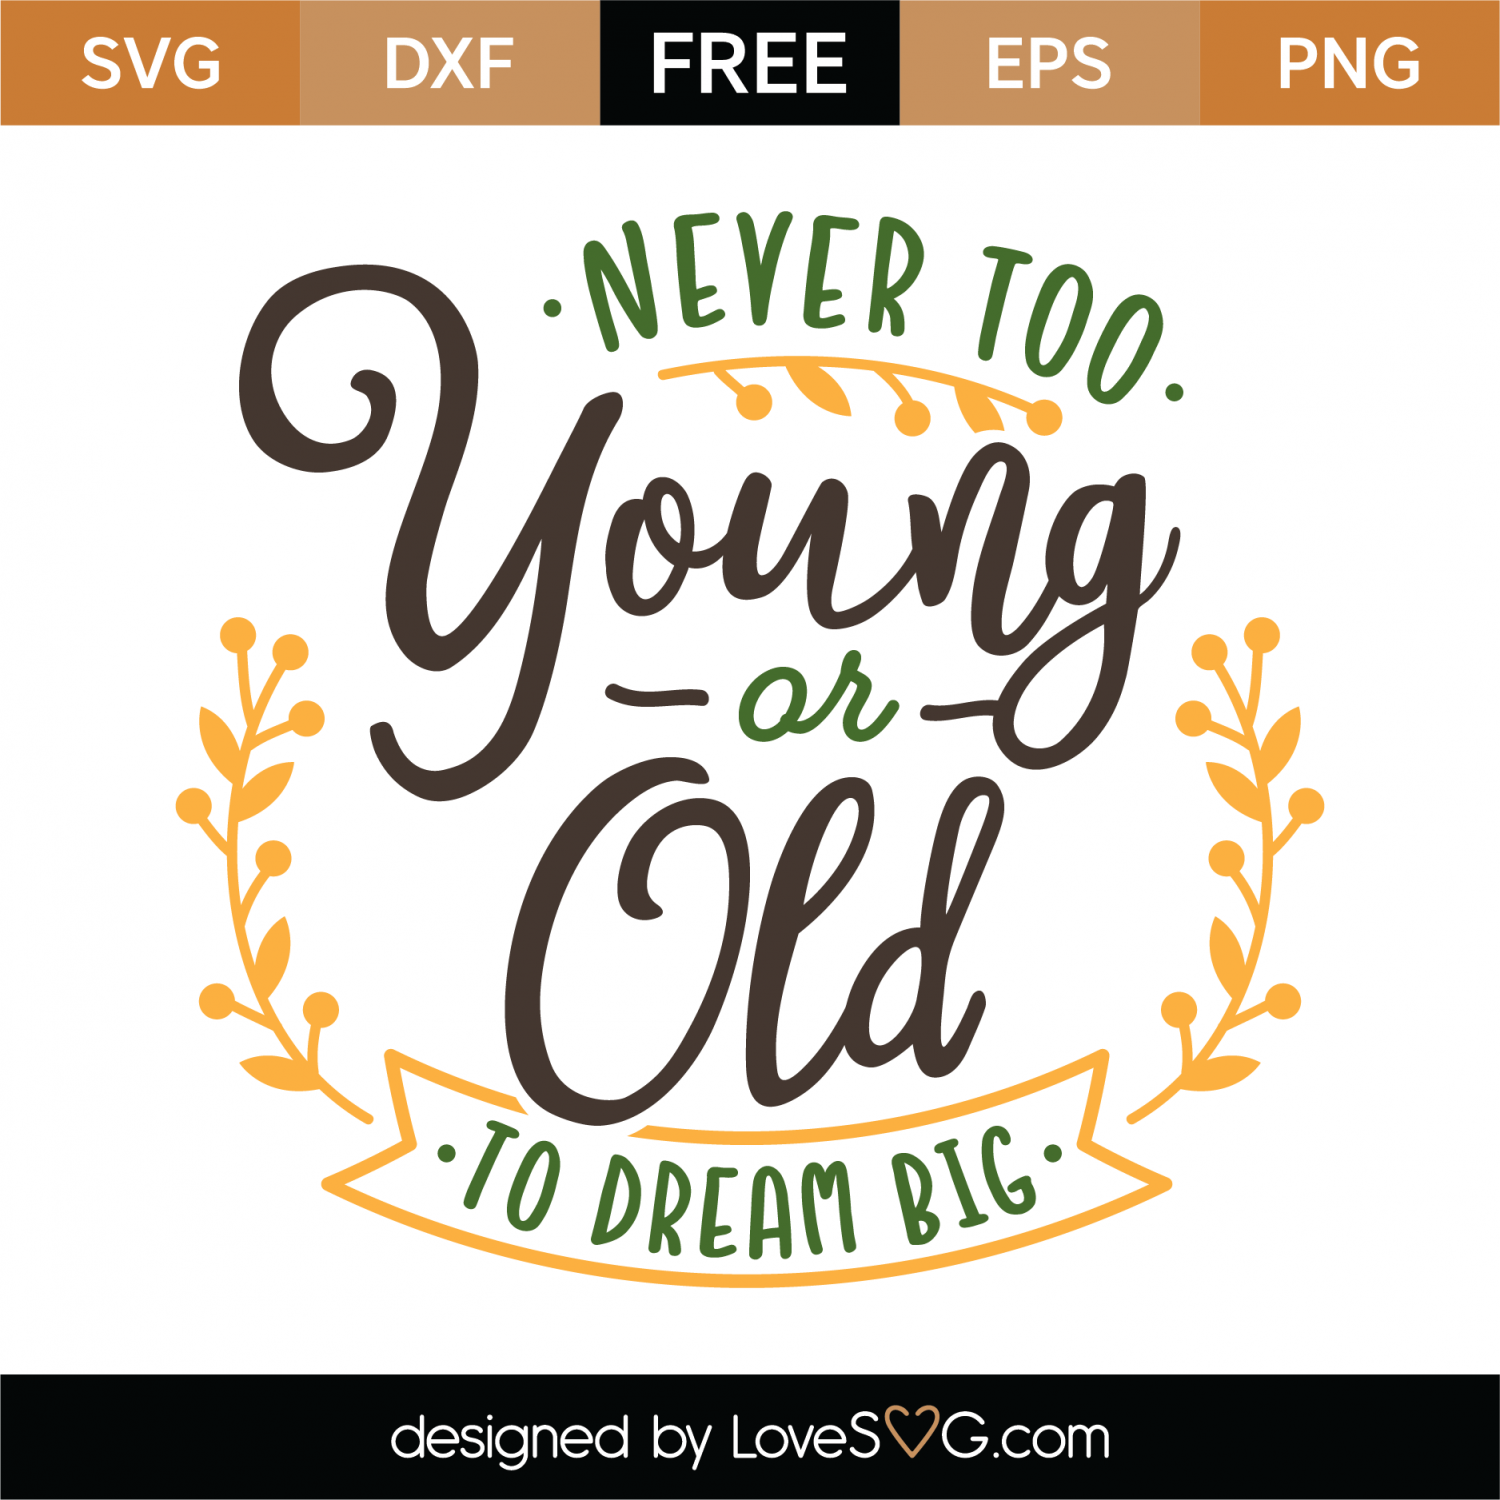 Download Free Dream Big SVG Cut File | Lovesvg.com